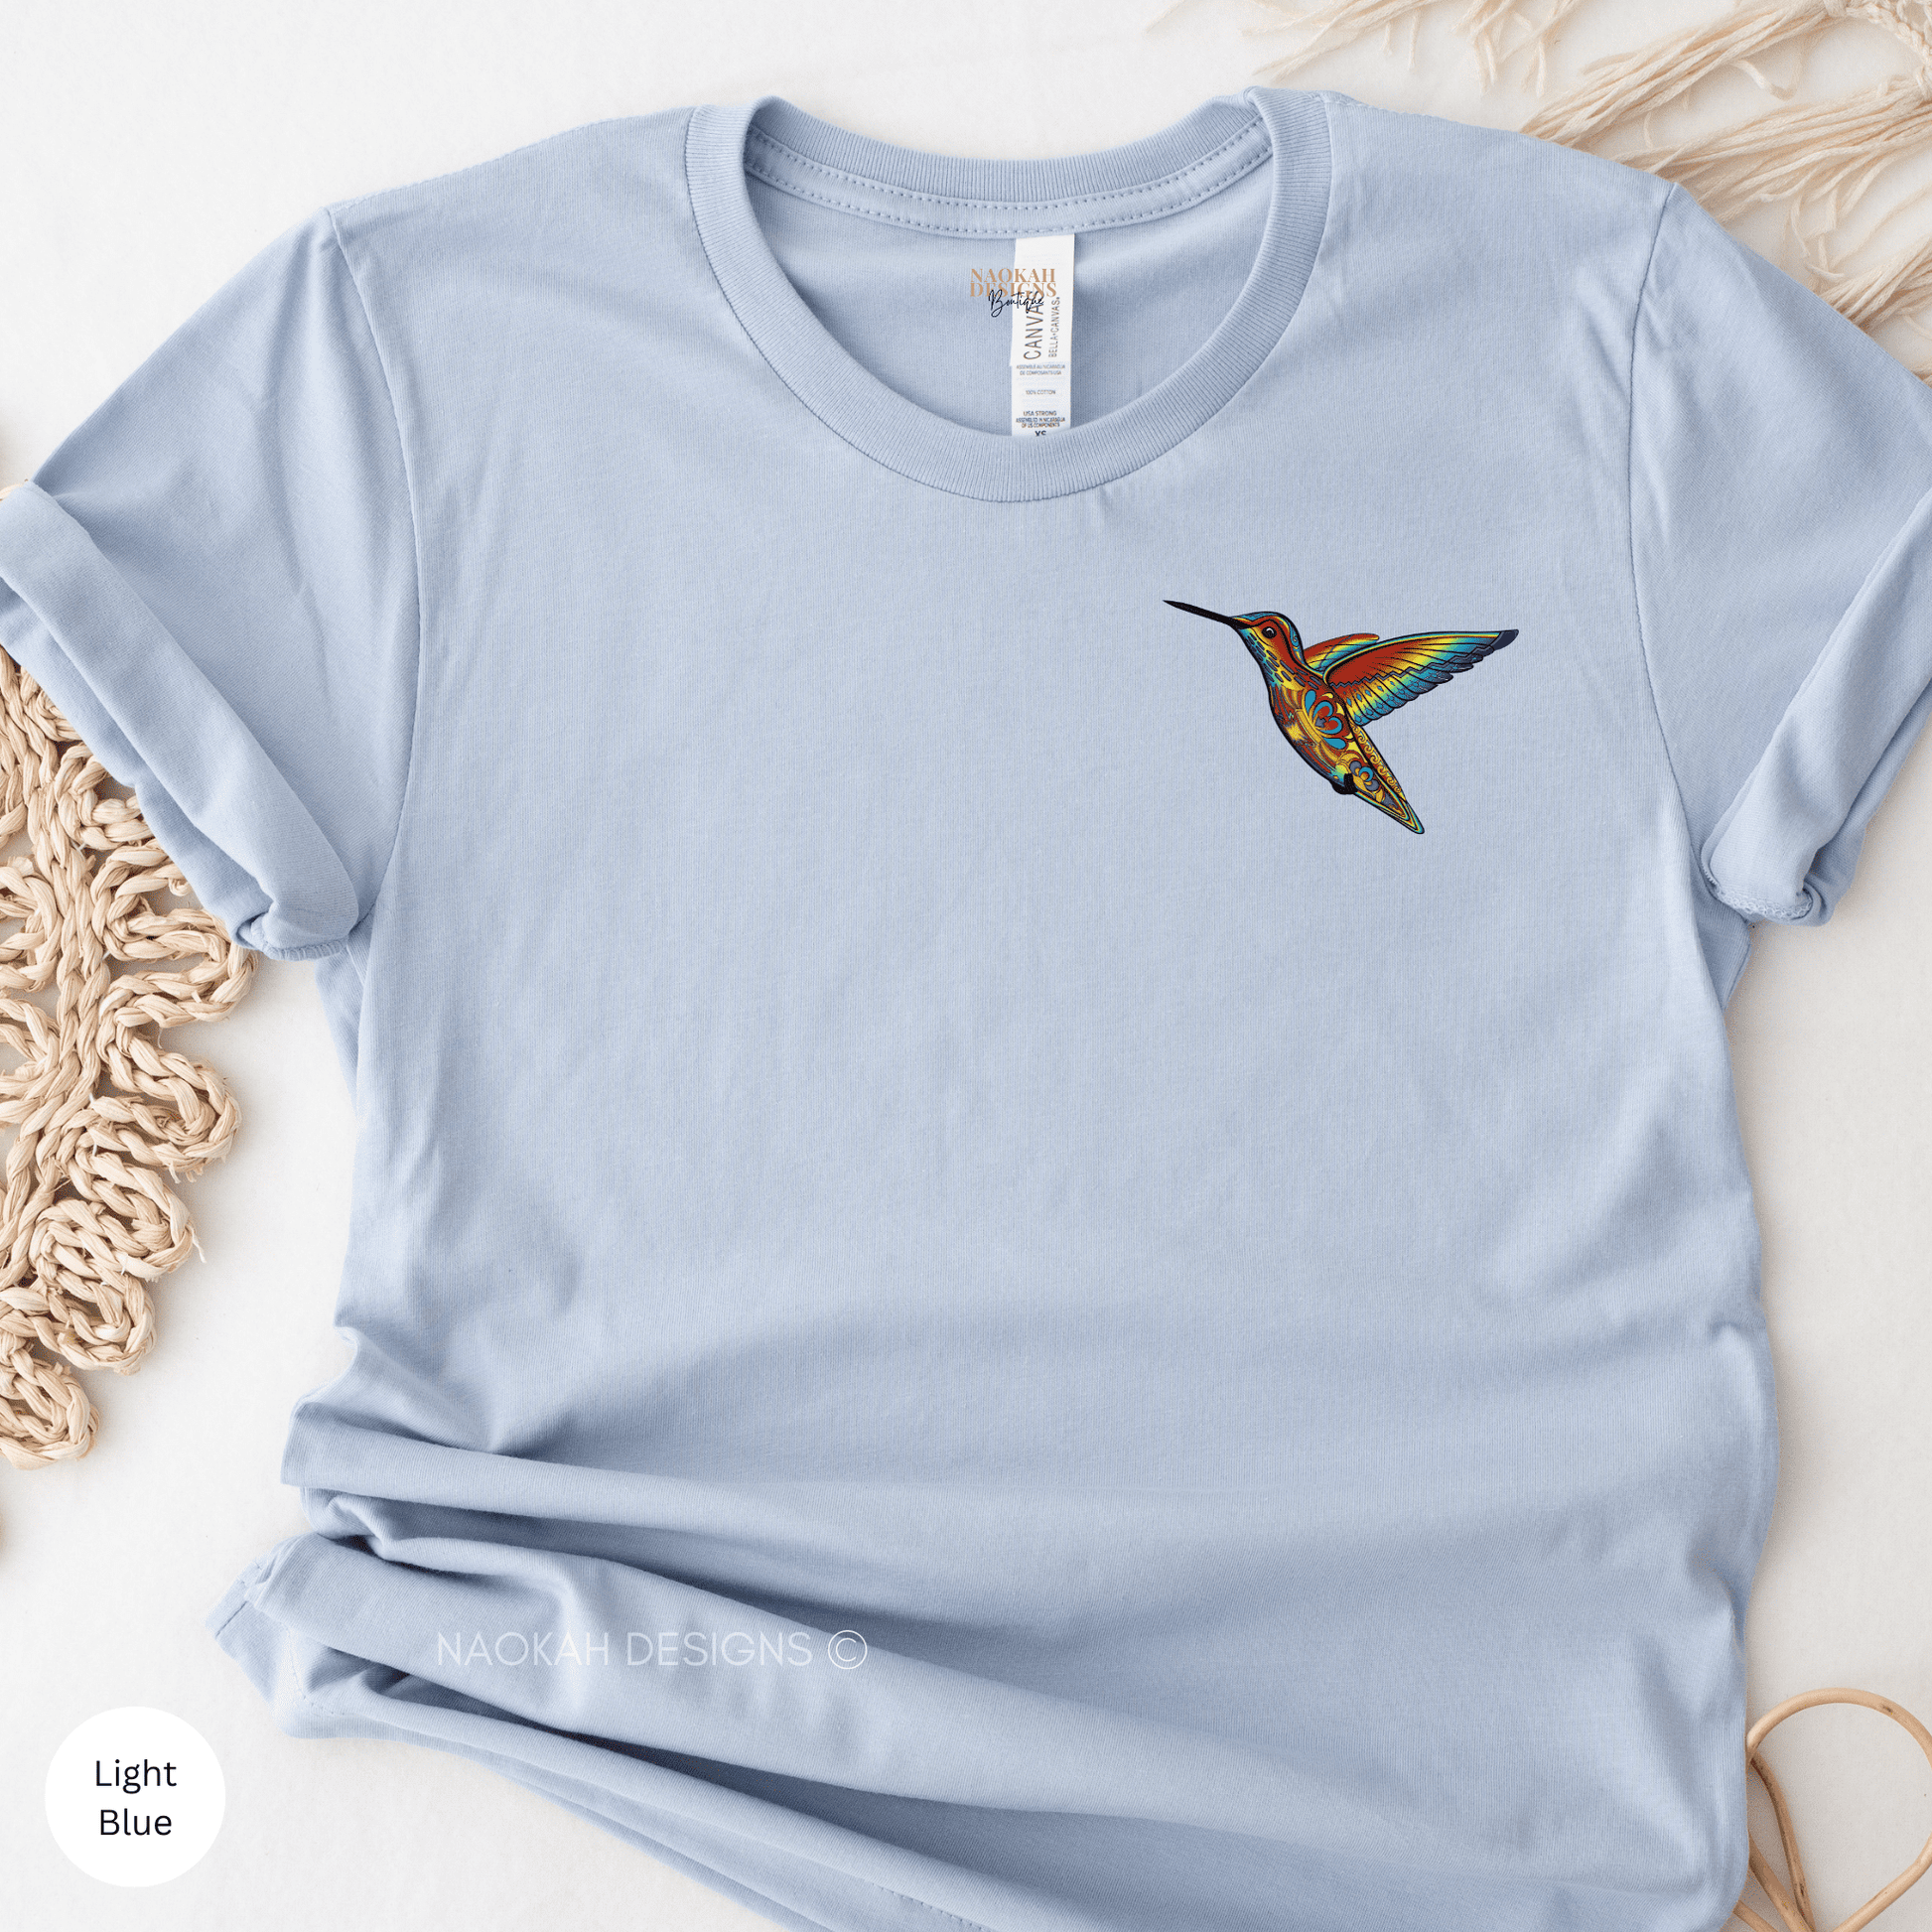 Indigenous Hummingbird Shirt, Floral Hummingbird Shirt, Bird Lover Shirt, Nature Lover, Bird Lover, Indigenous Owned, Pocket Size Design, Two spirit shirt, LGBT shirt